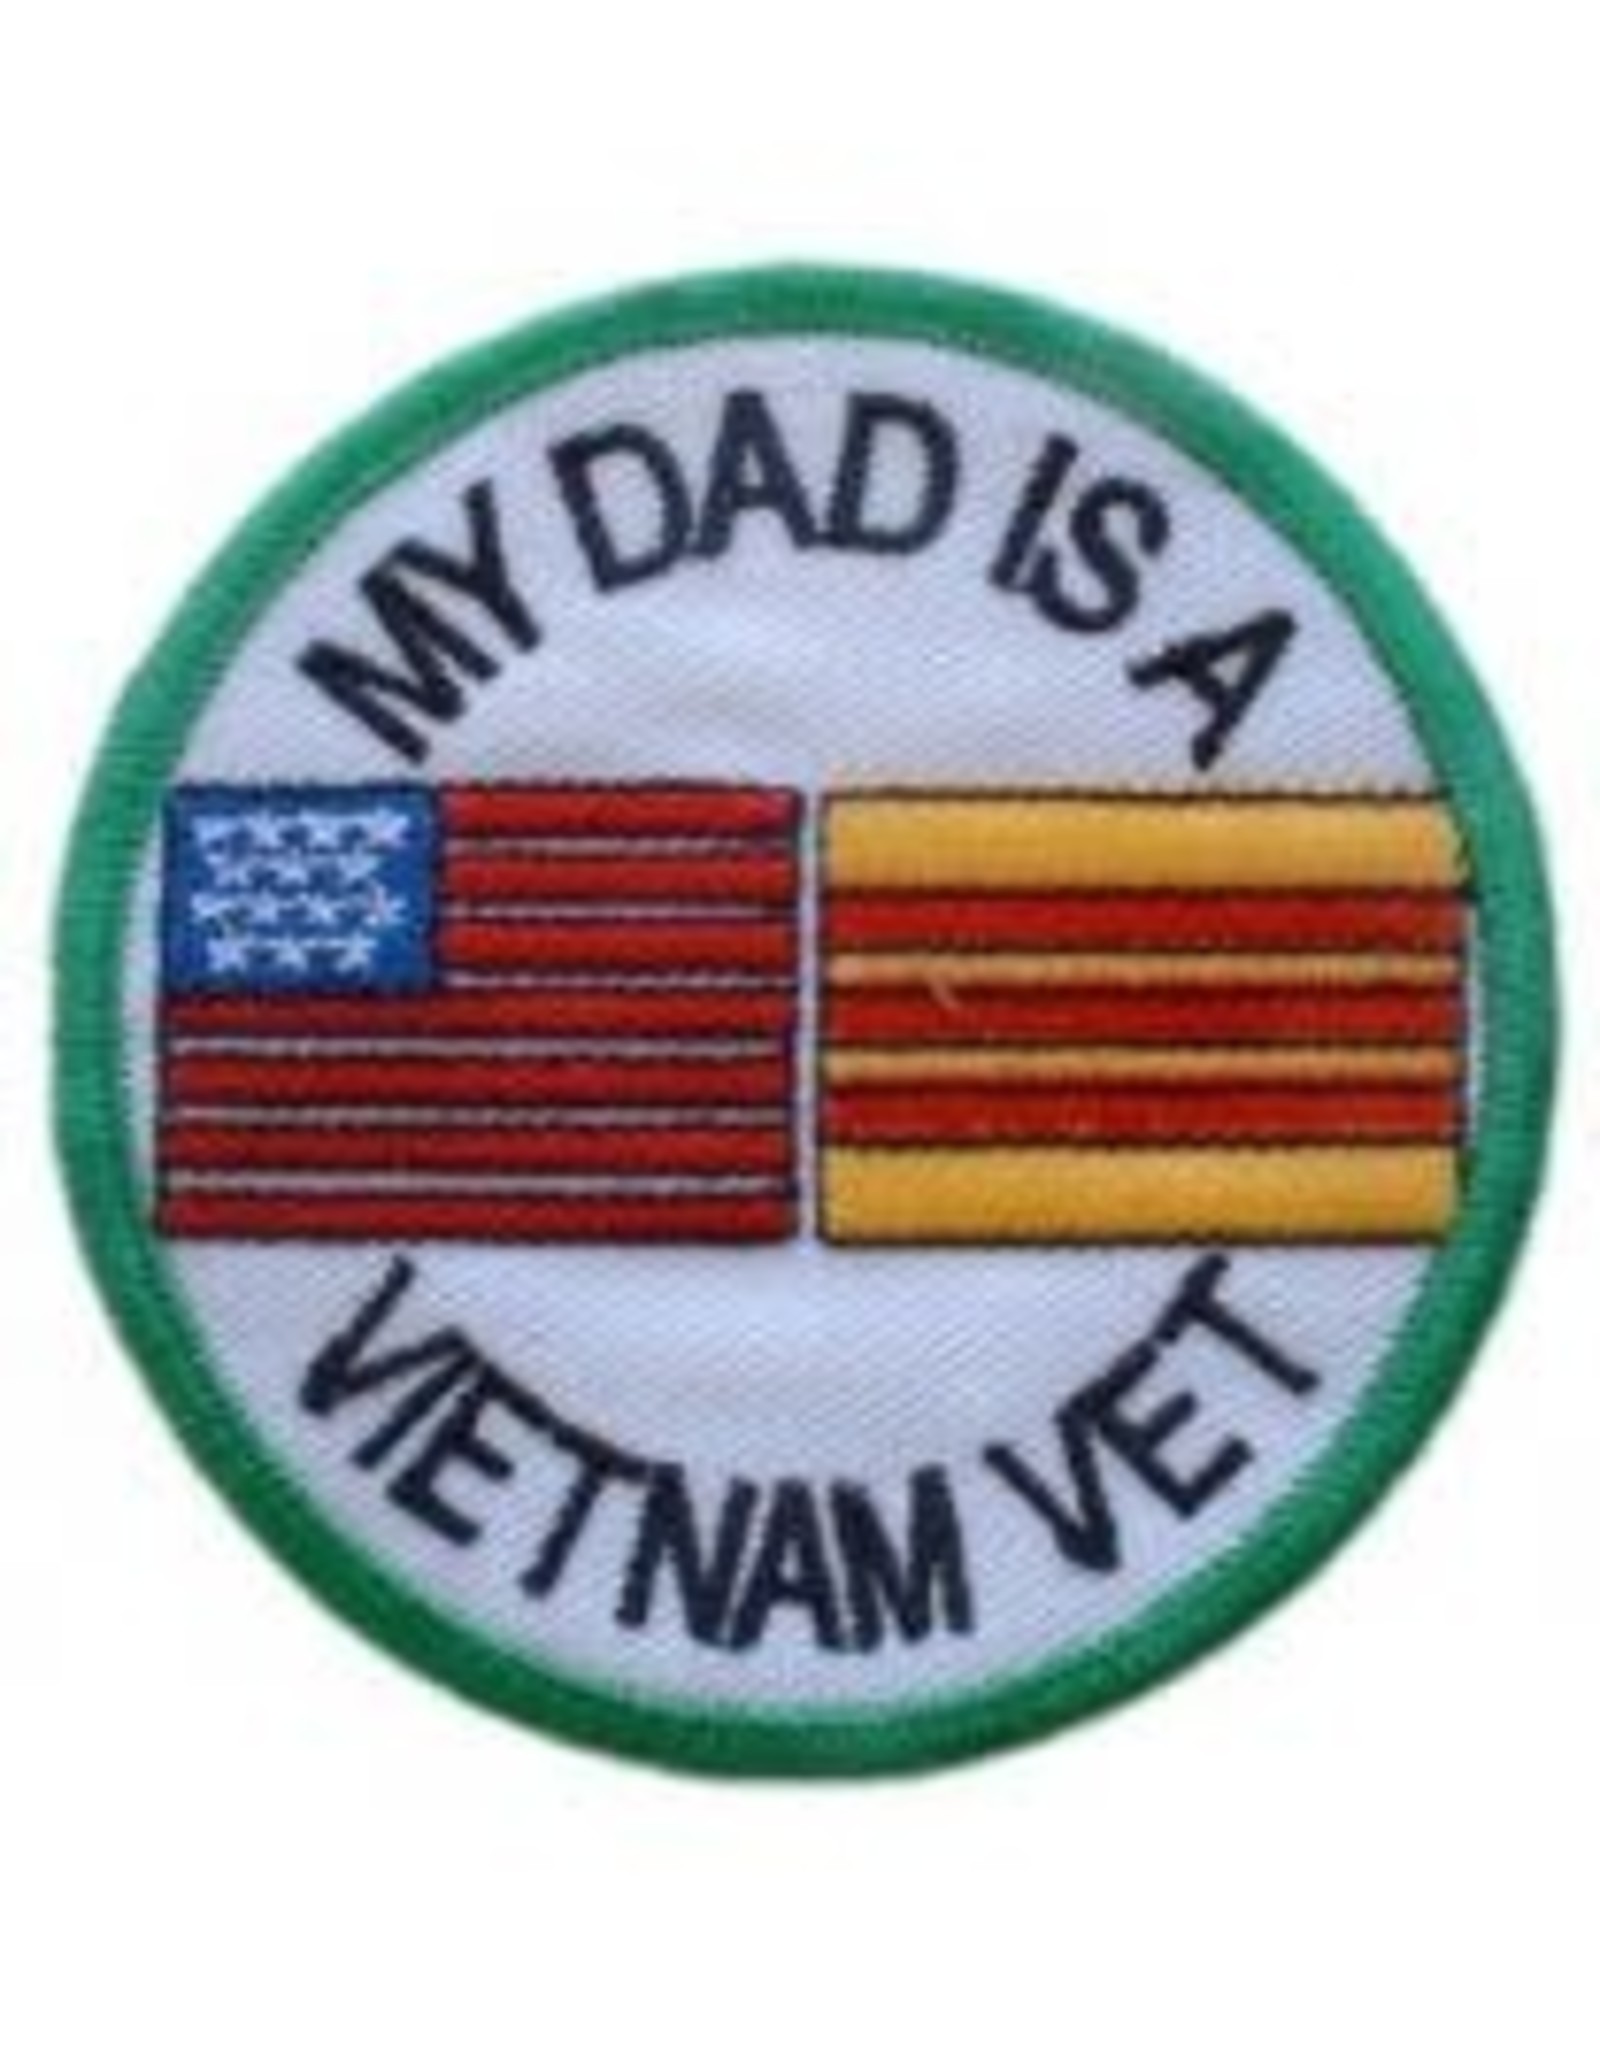 Patch - Vietnam My Dad is a Vet